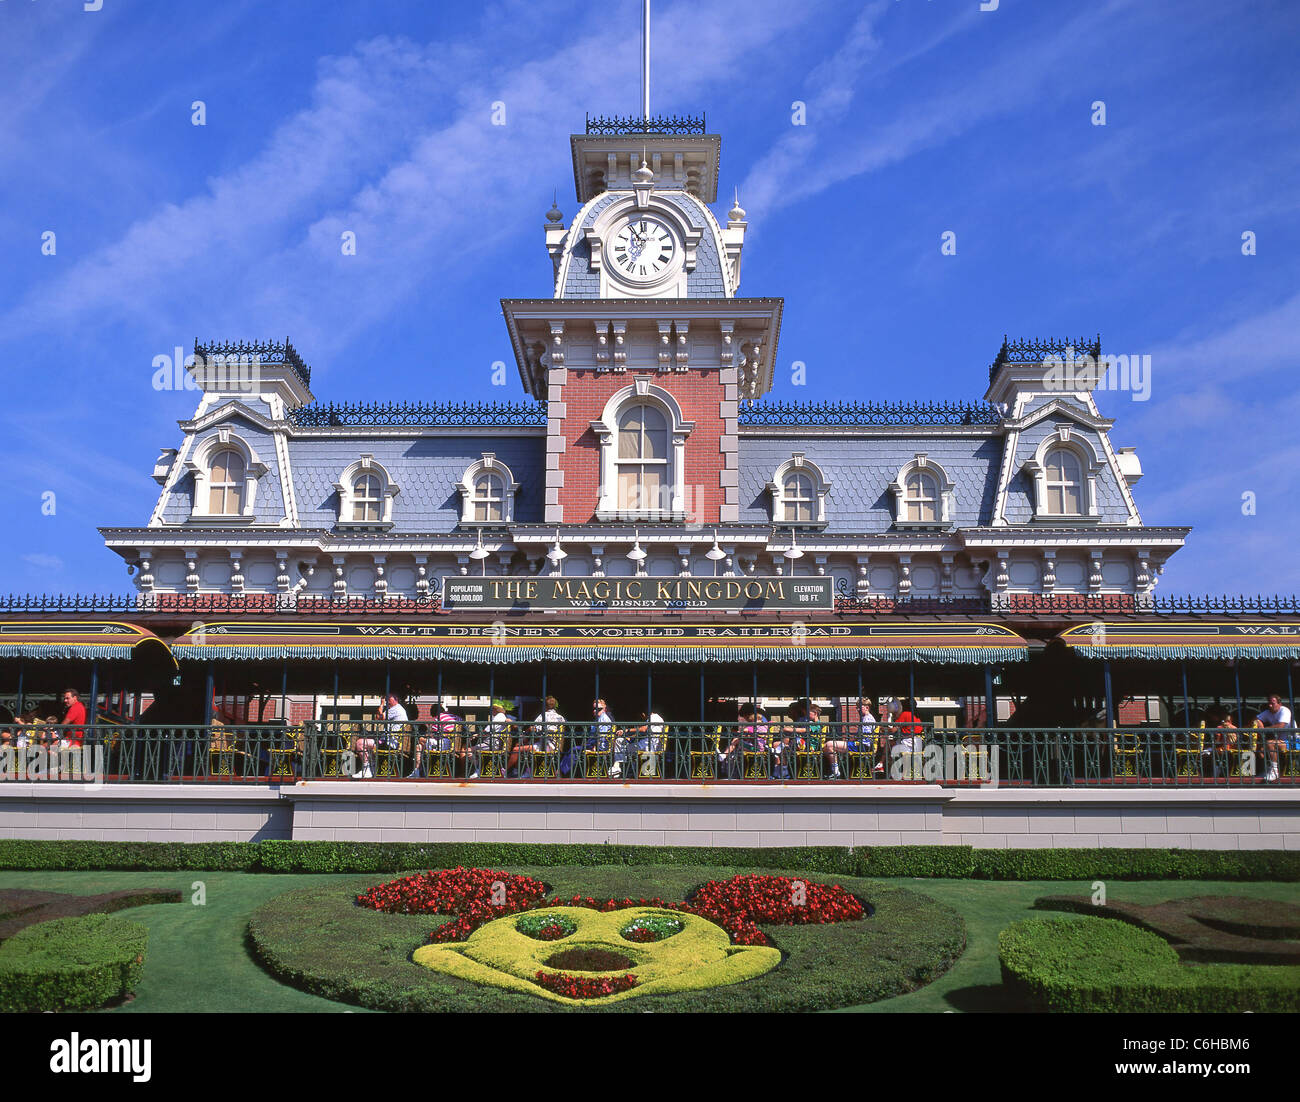 Magic Kingdom Railway Station entrance at Walt Disney World Resort